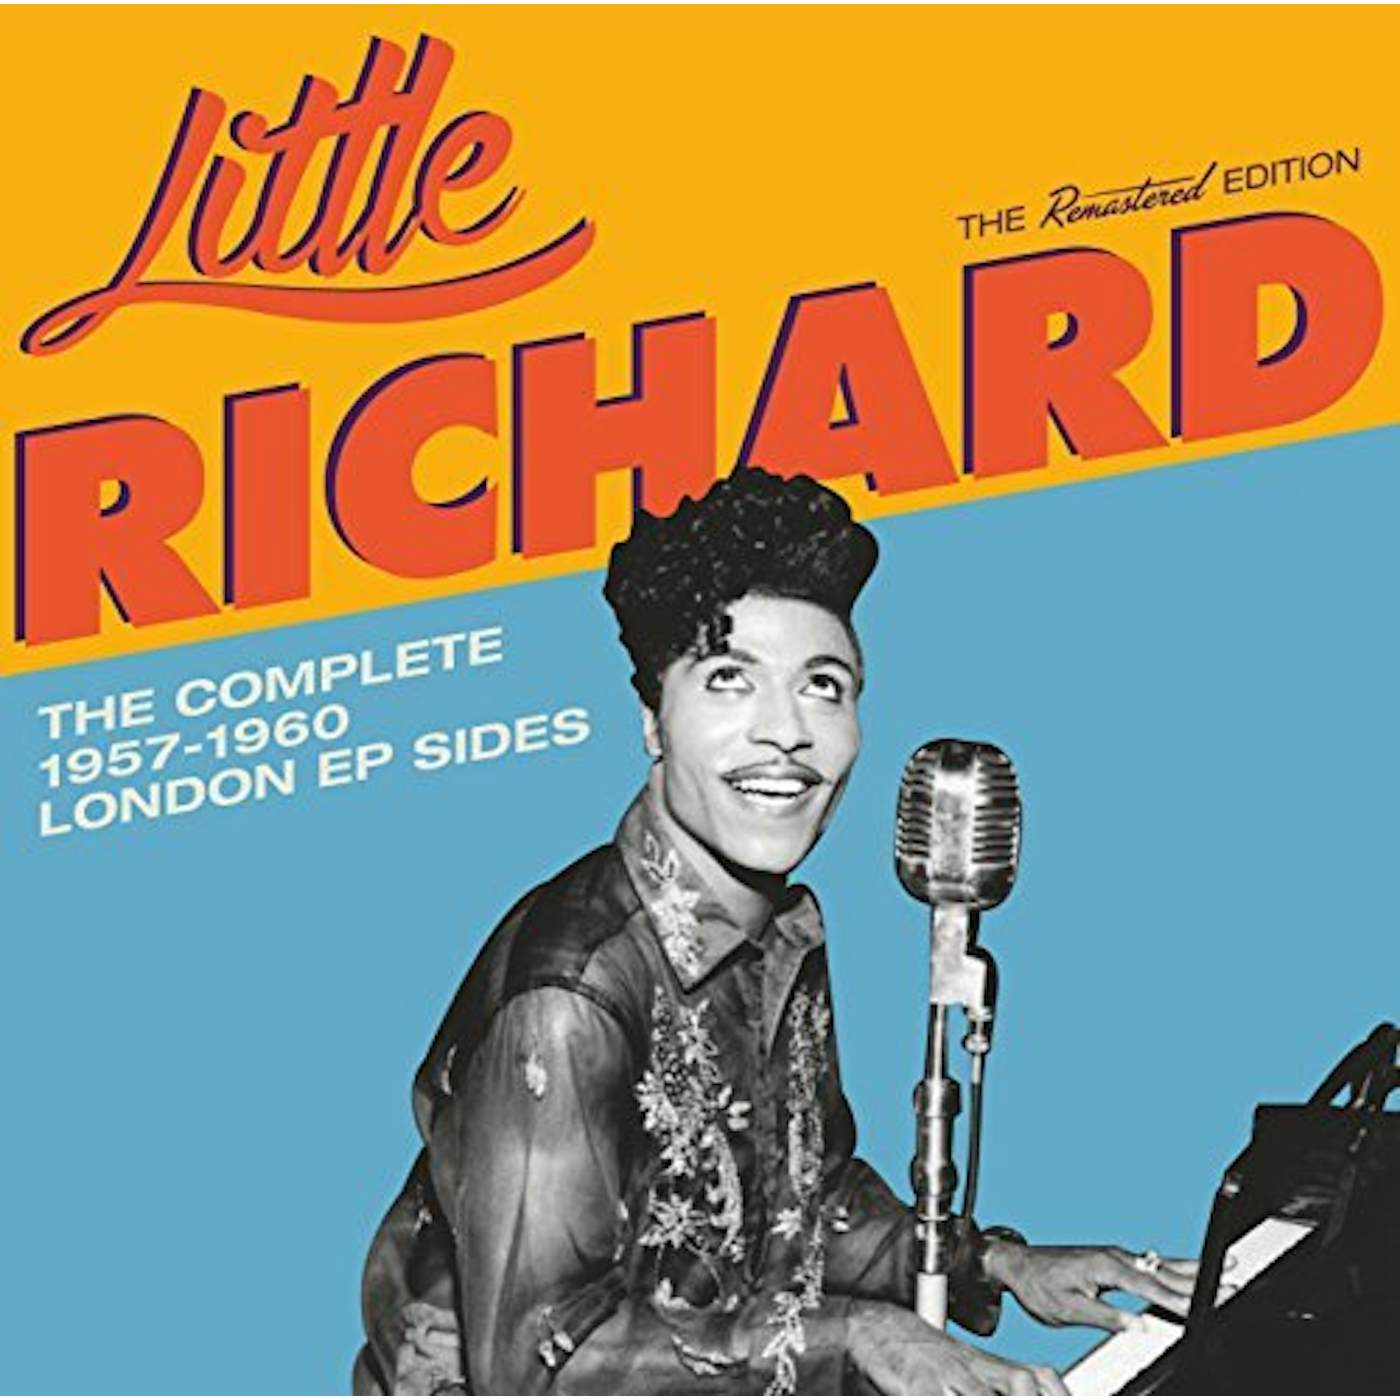 Little Richard COMPLETE 1957-1960 LONDON EP SIDES CD